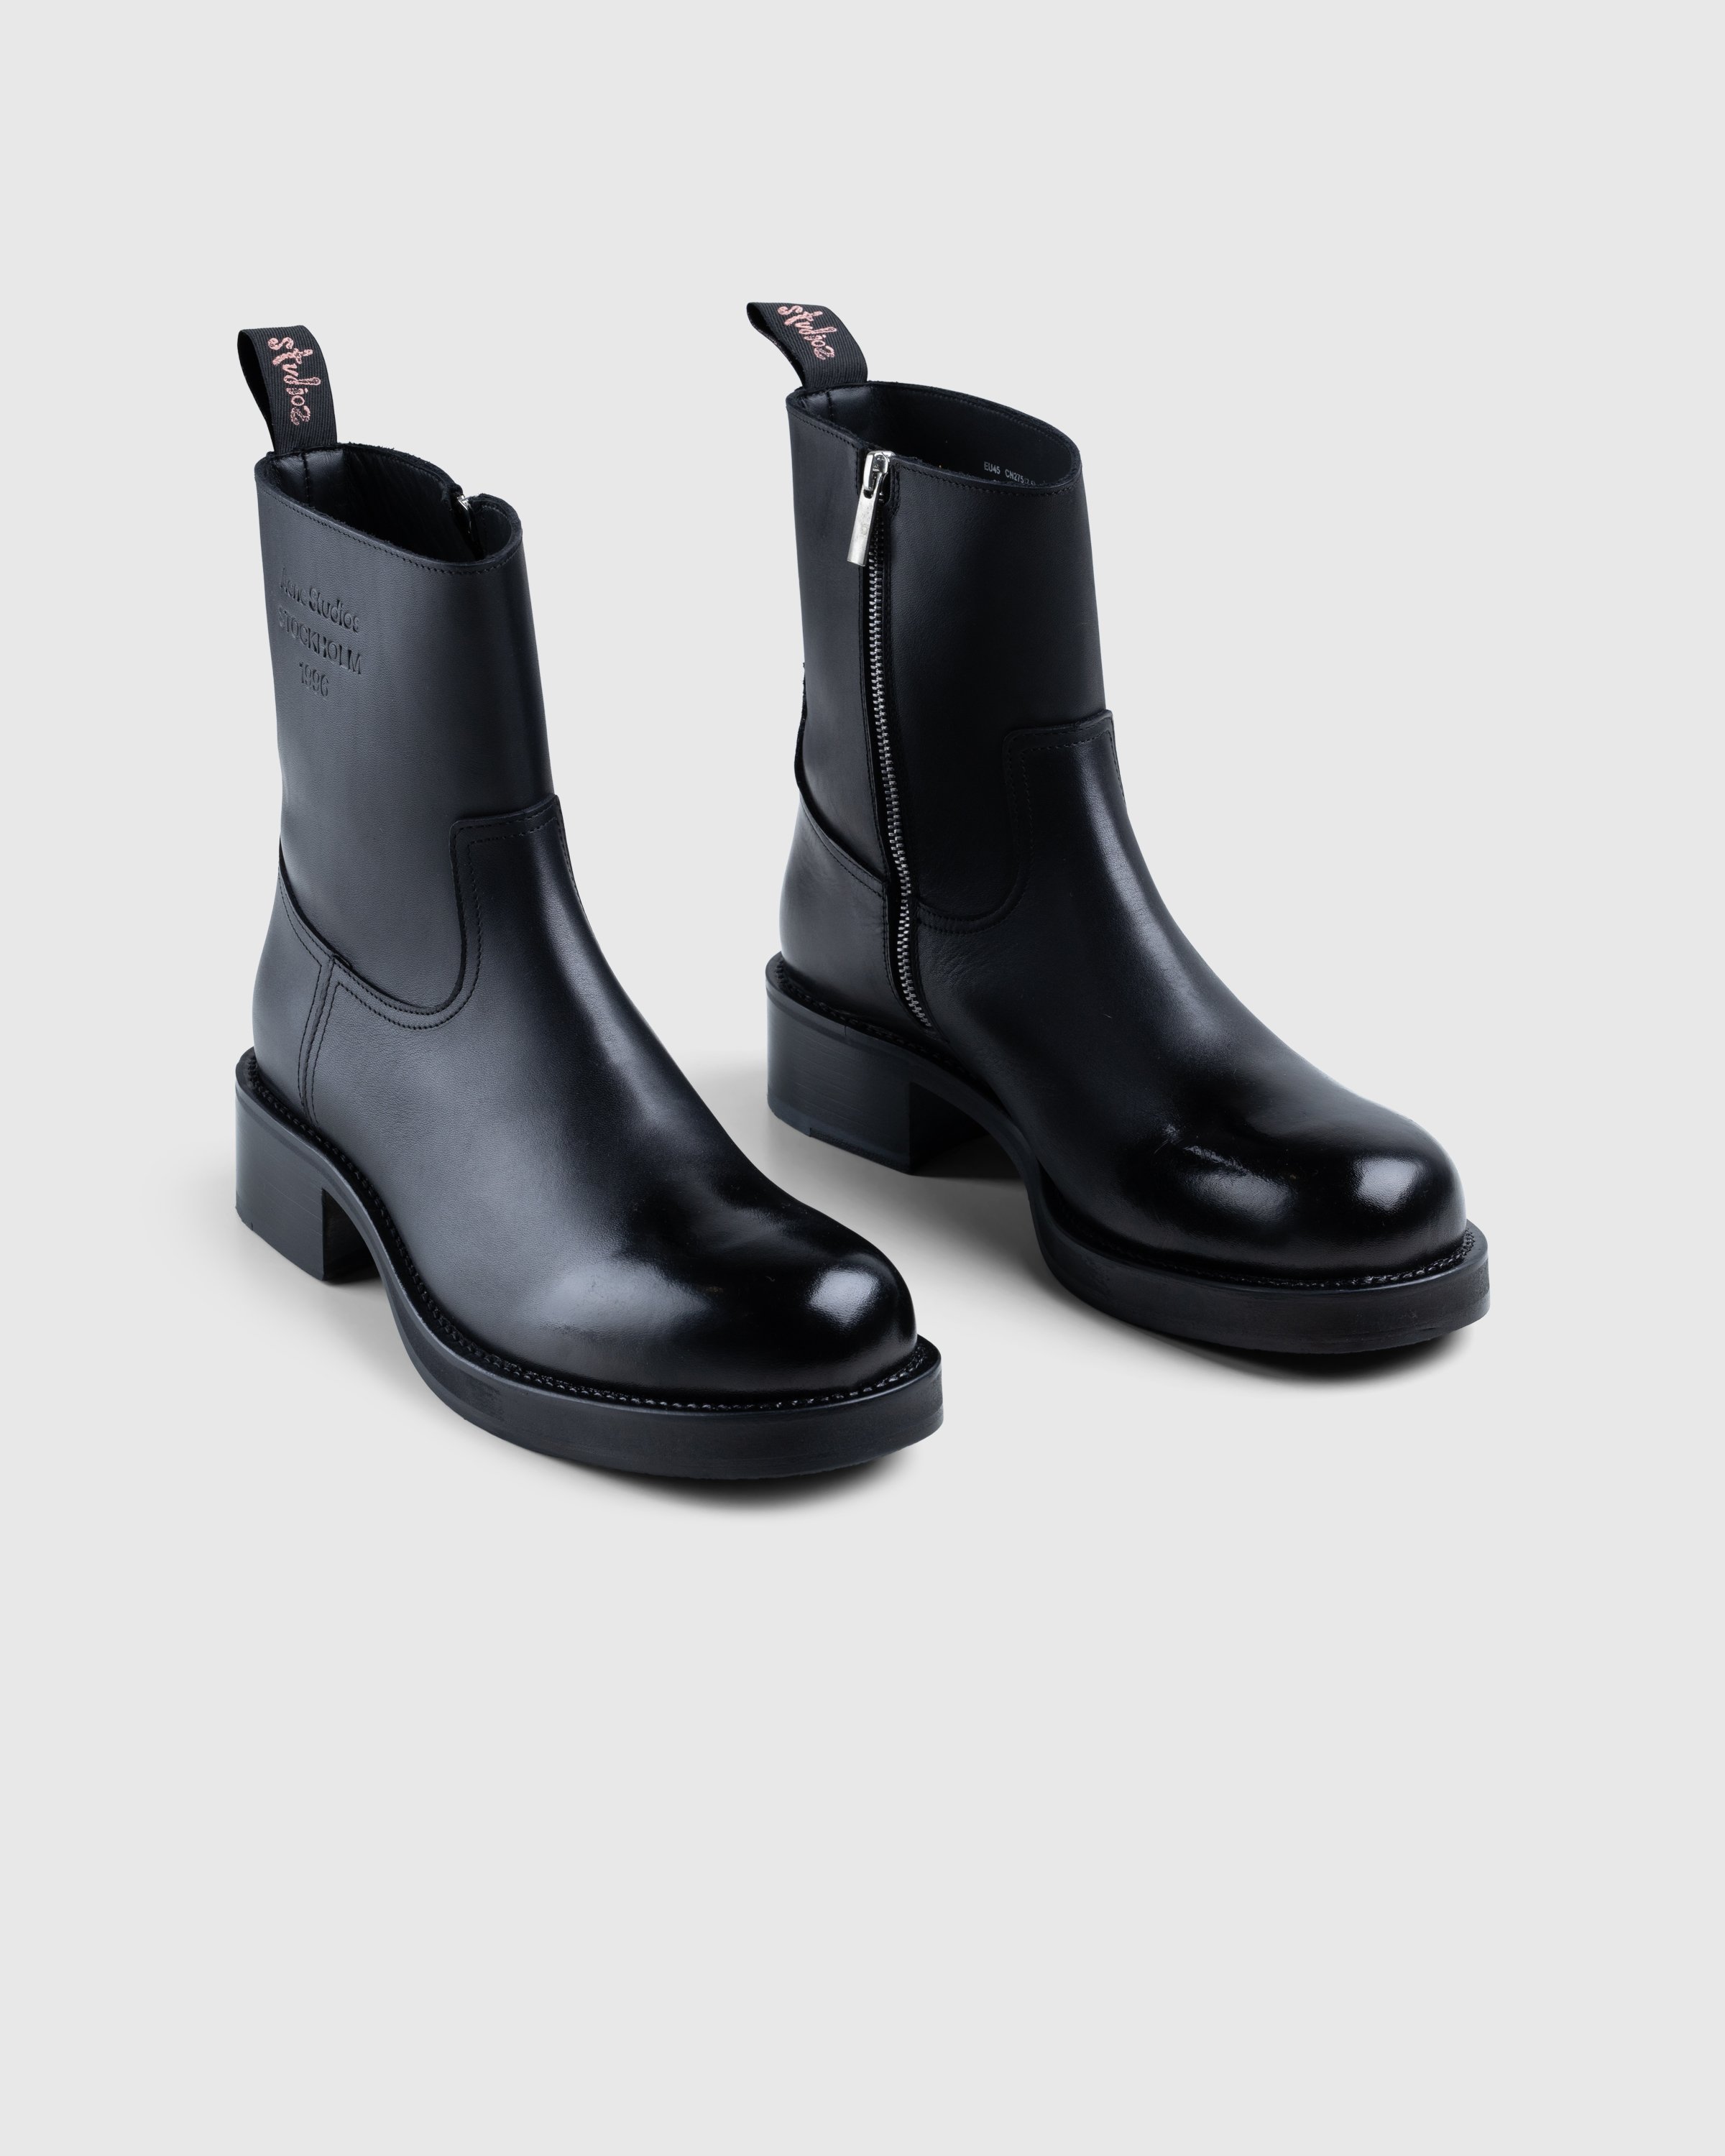 Acne Studios - Sprayed Leather Ankle Boots Black - Footwear - Black - Image 3